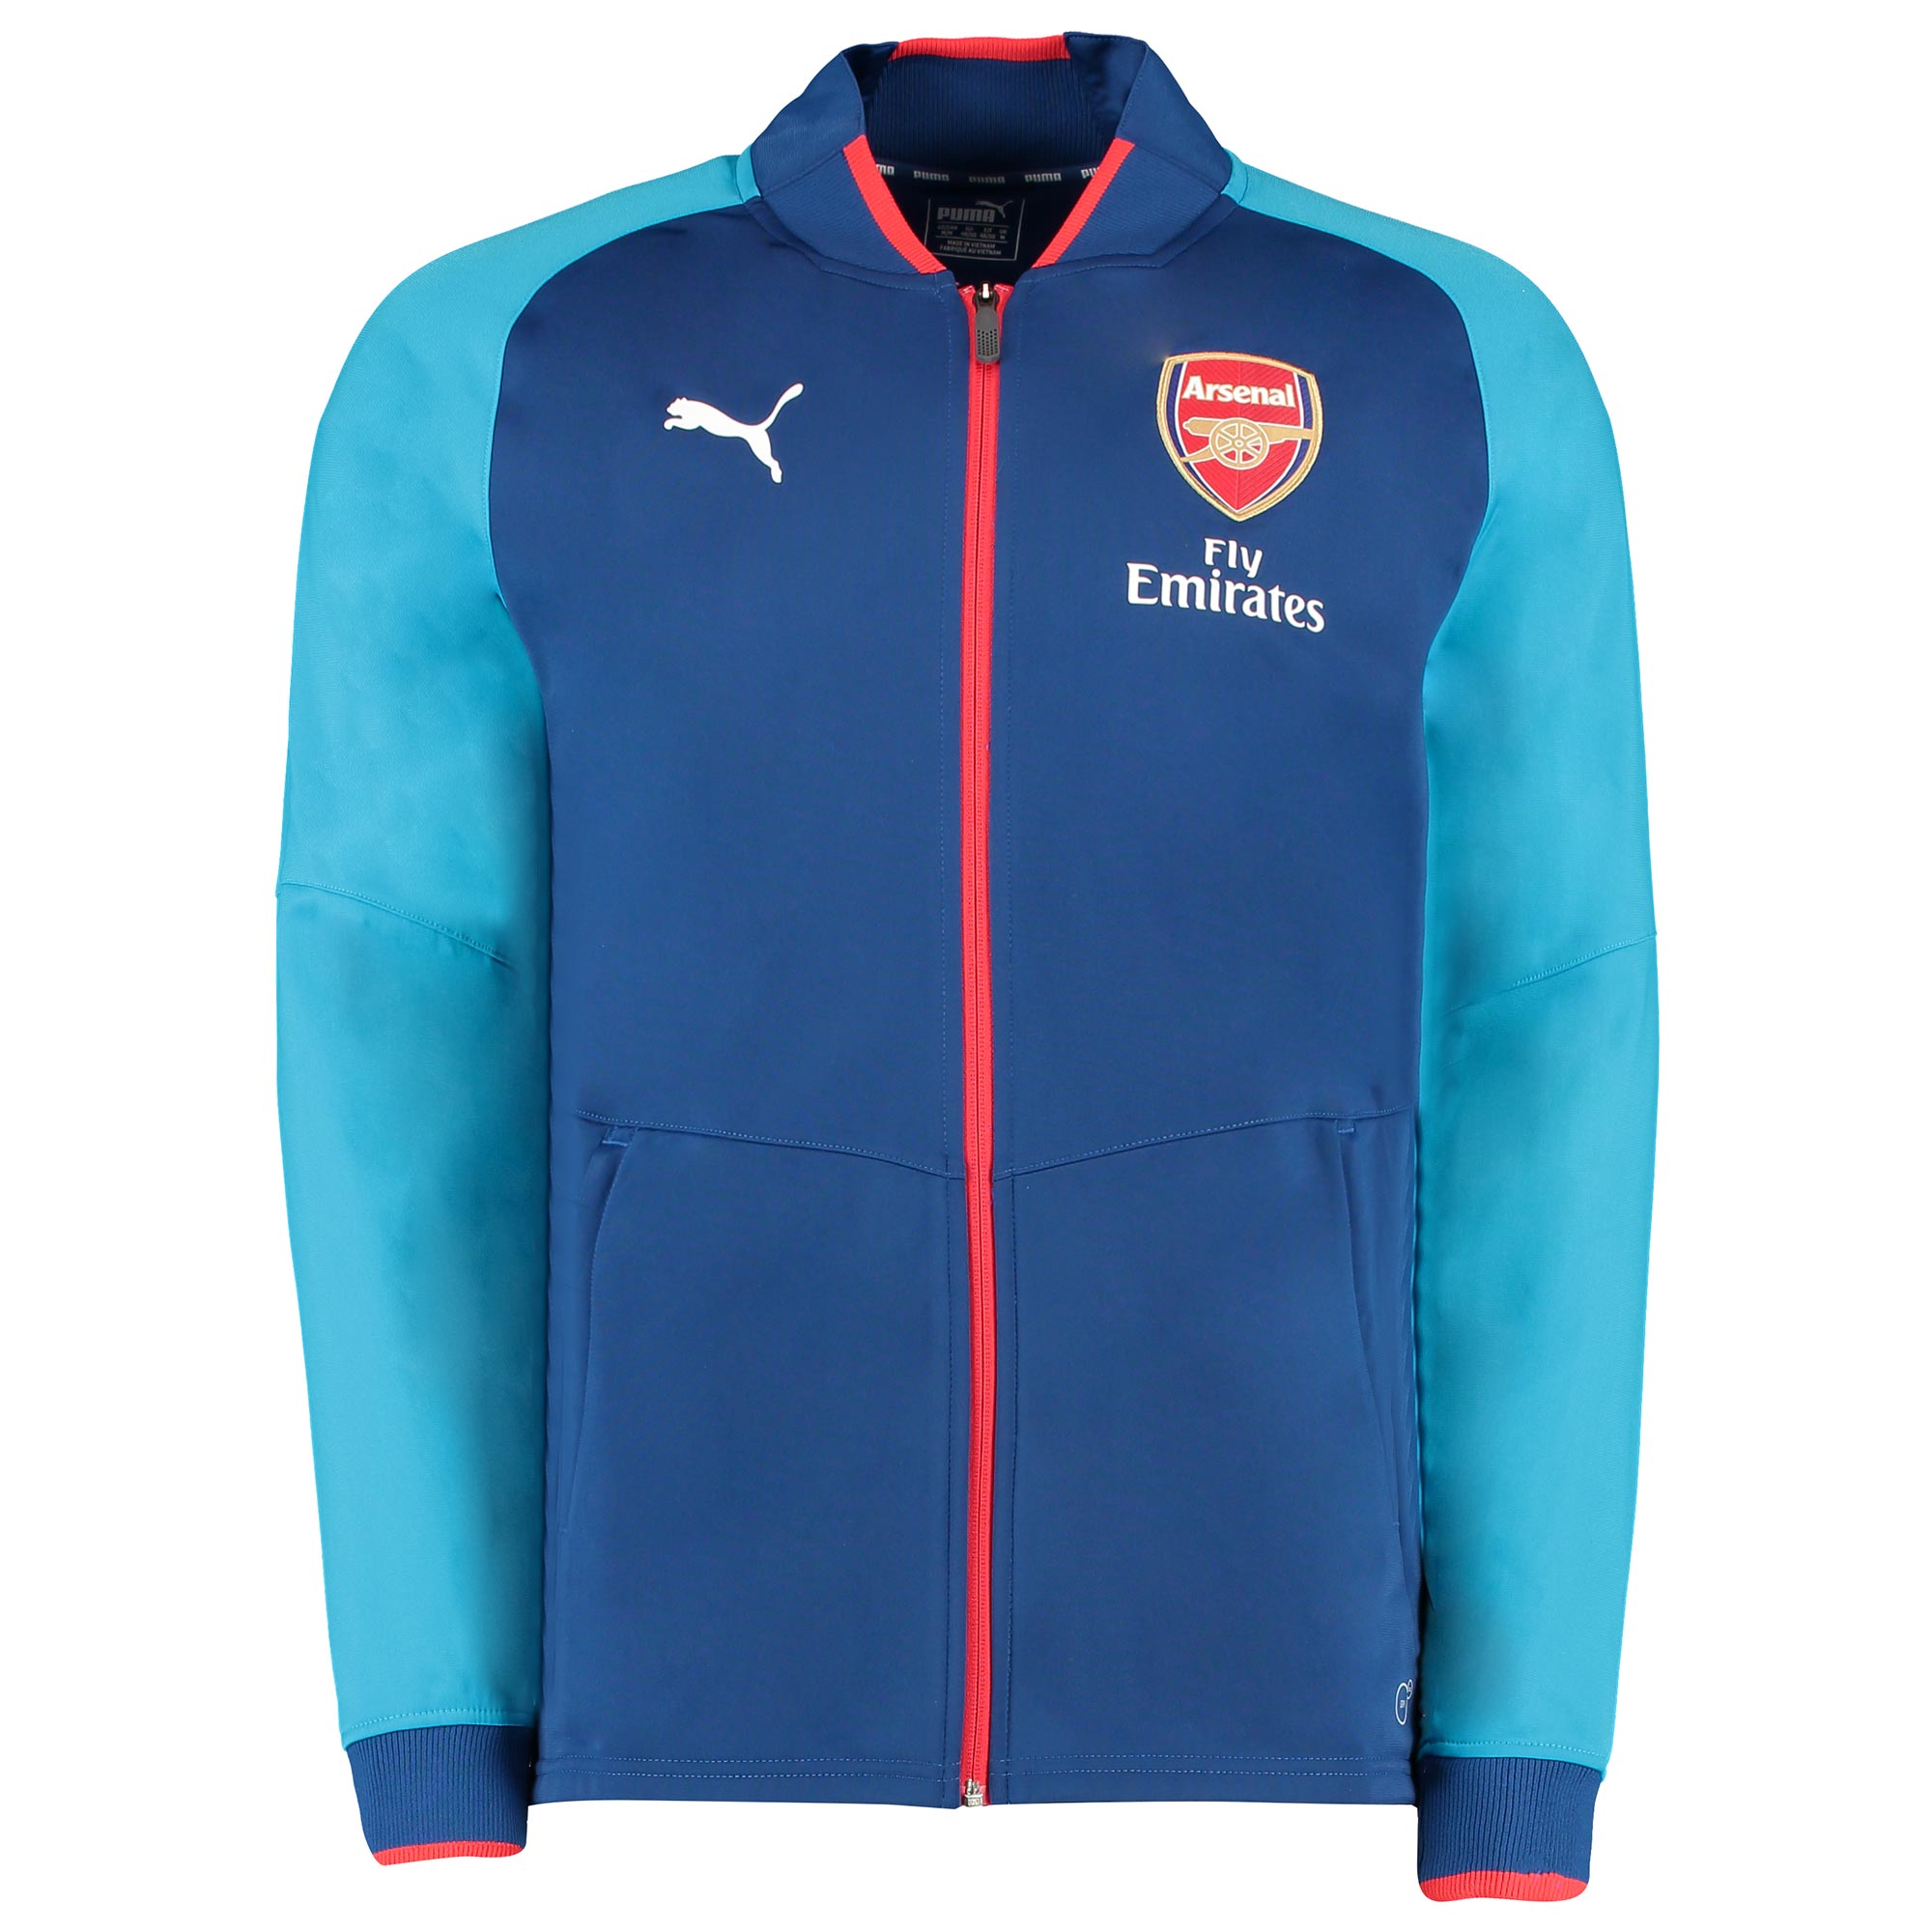 Puma Arsenal FC Jacket - Limoges Blue Danube - Football Shirt Culture - Latest Football Kit News and More